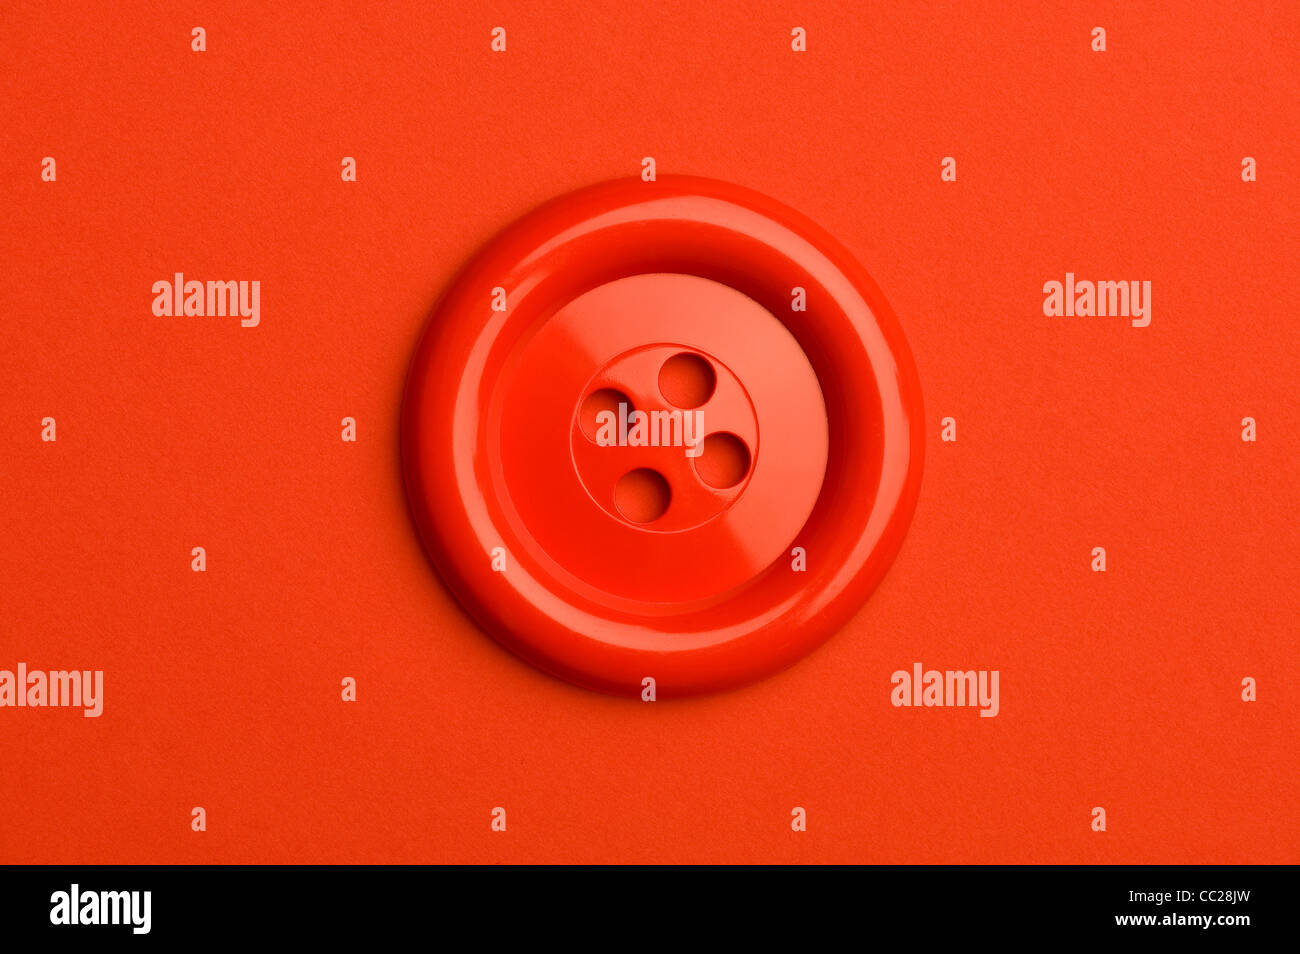 Un botón rojo sobre un fondo rojo. Foto de stock